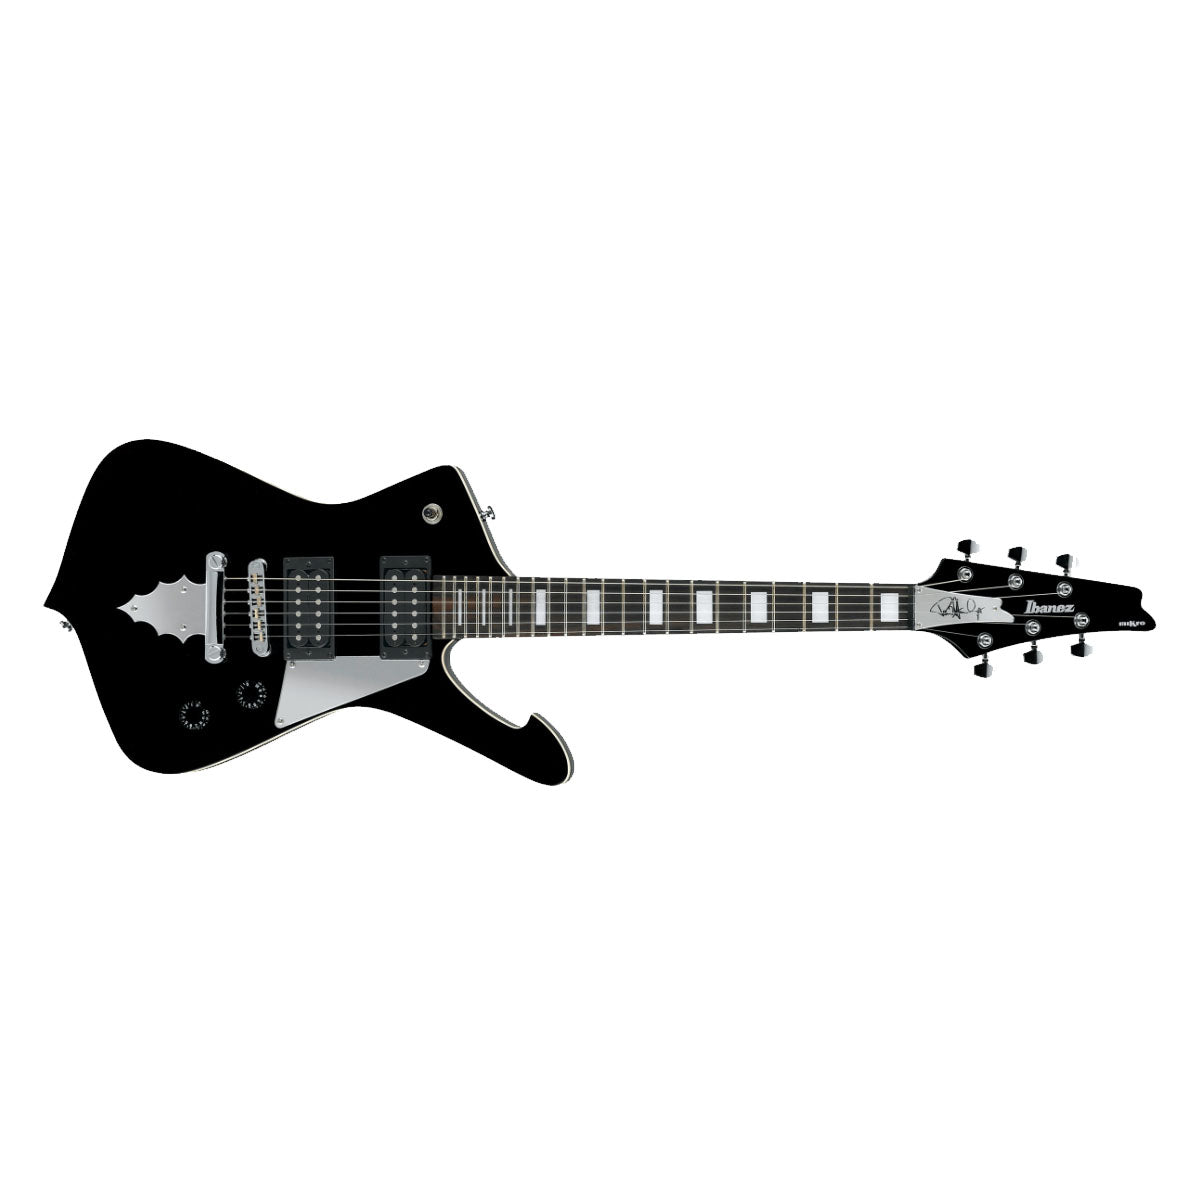 Ibanez PSM10 Paul Stanley Mikro Signature Electric Guitar Black - PSM10BK